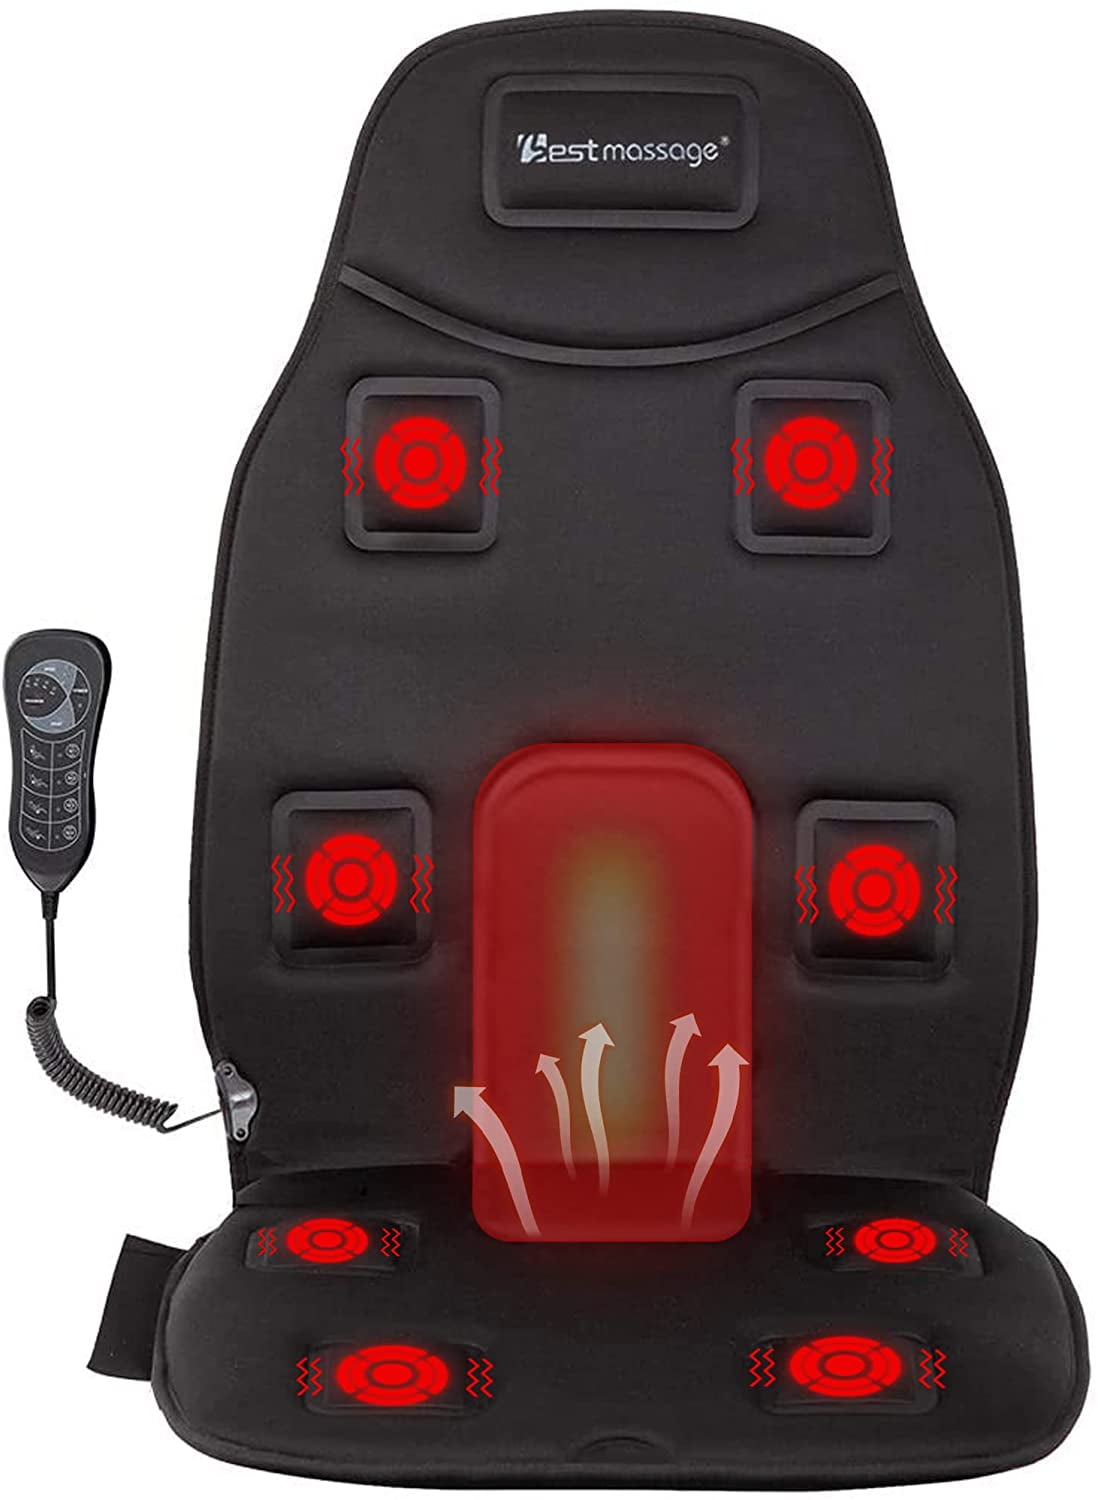 BestMassage 8-Motor Vibration Full Back Heated Car Seat Massager